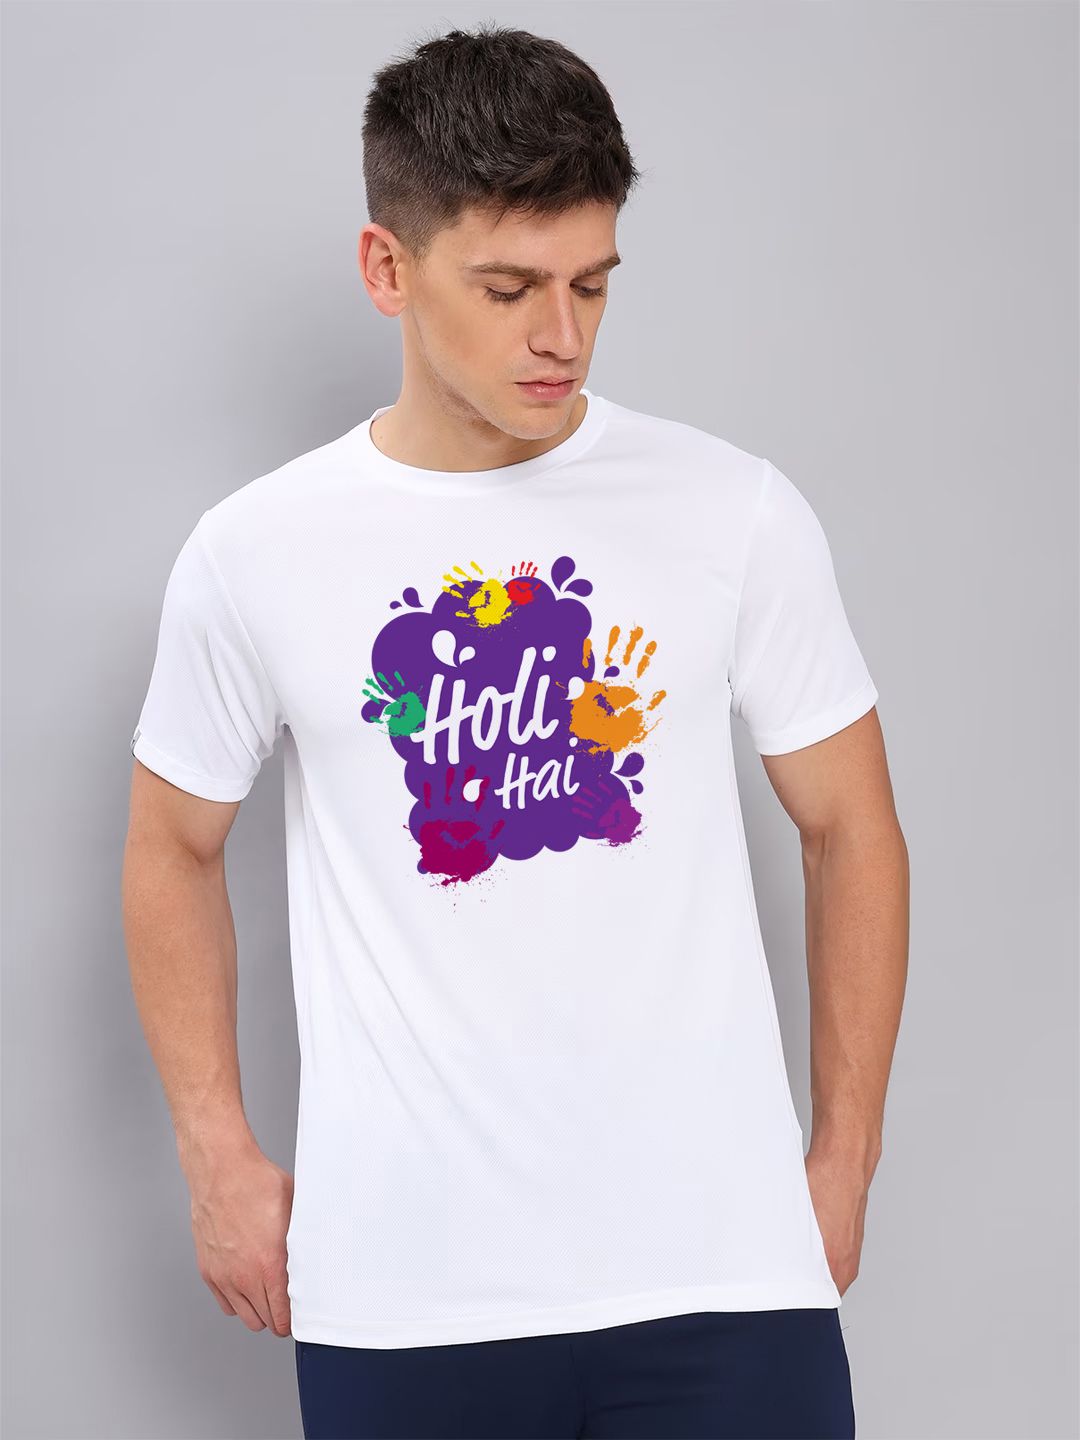     			GET GOLF Cotton Blend Regular Fit Printed Half Sleeves Men's Holi T-Shirt  - White ( Pack of 1 )